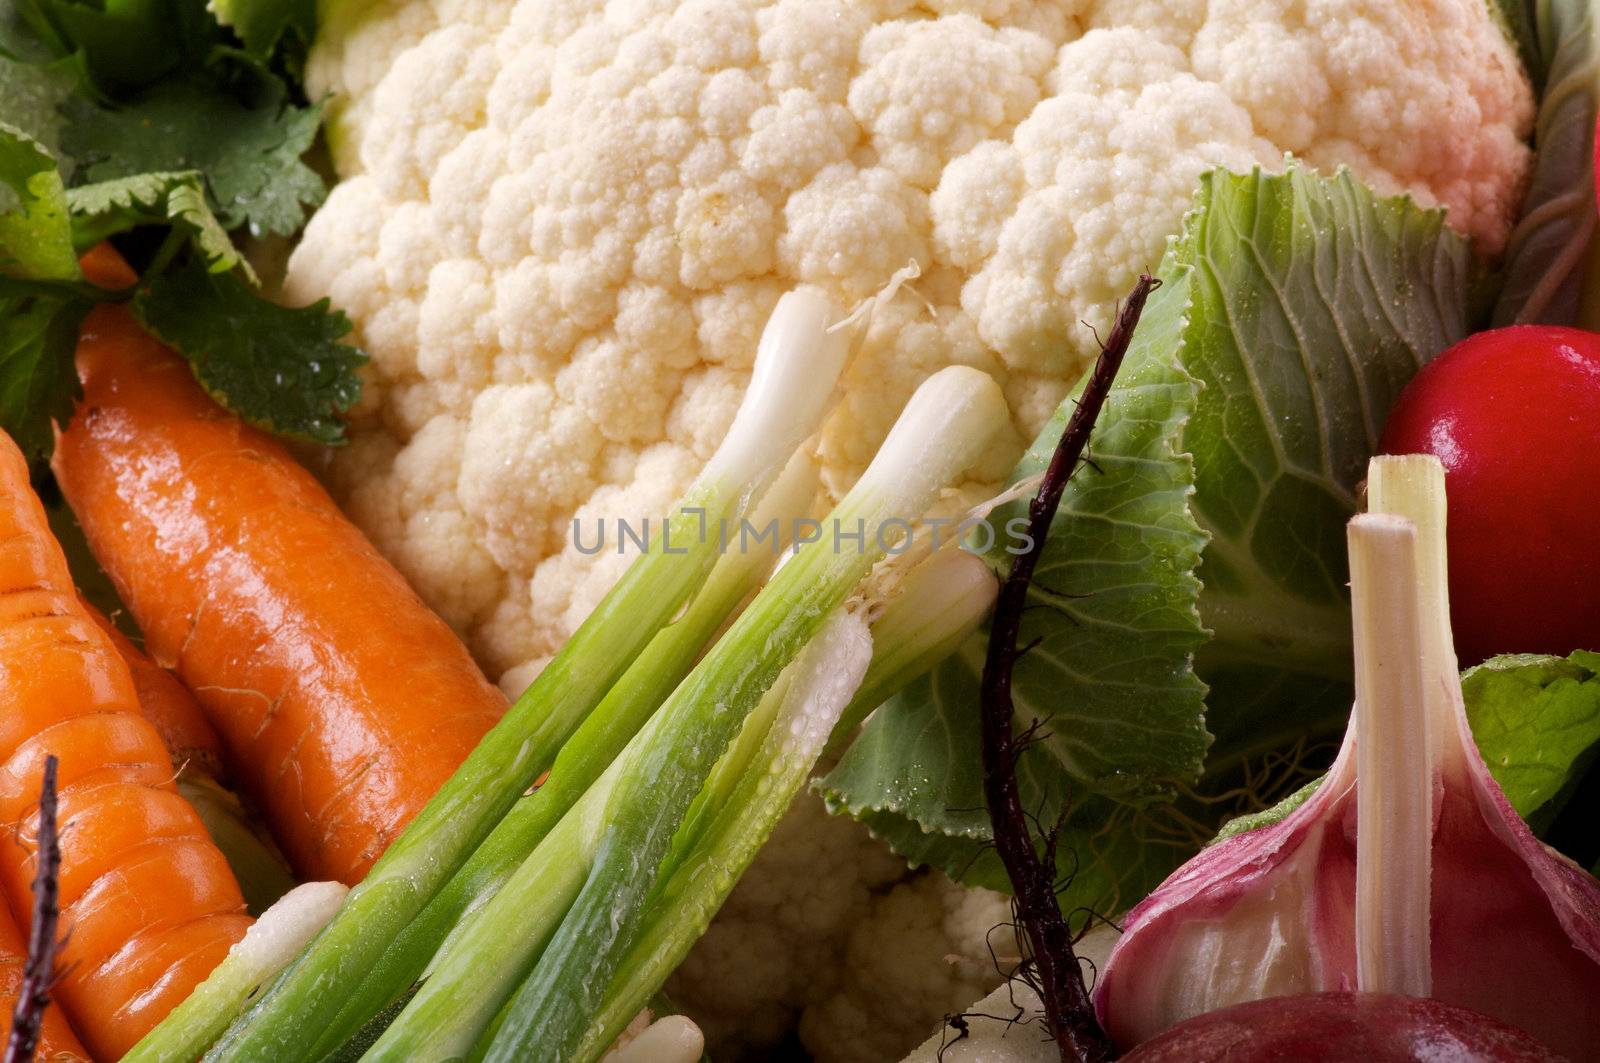 Raw Vegetables Background by zhekos